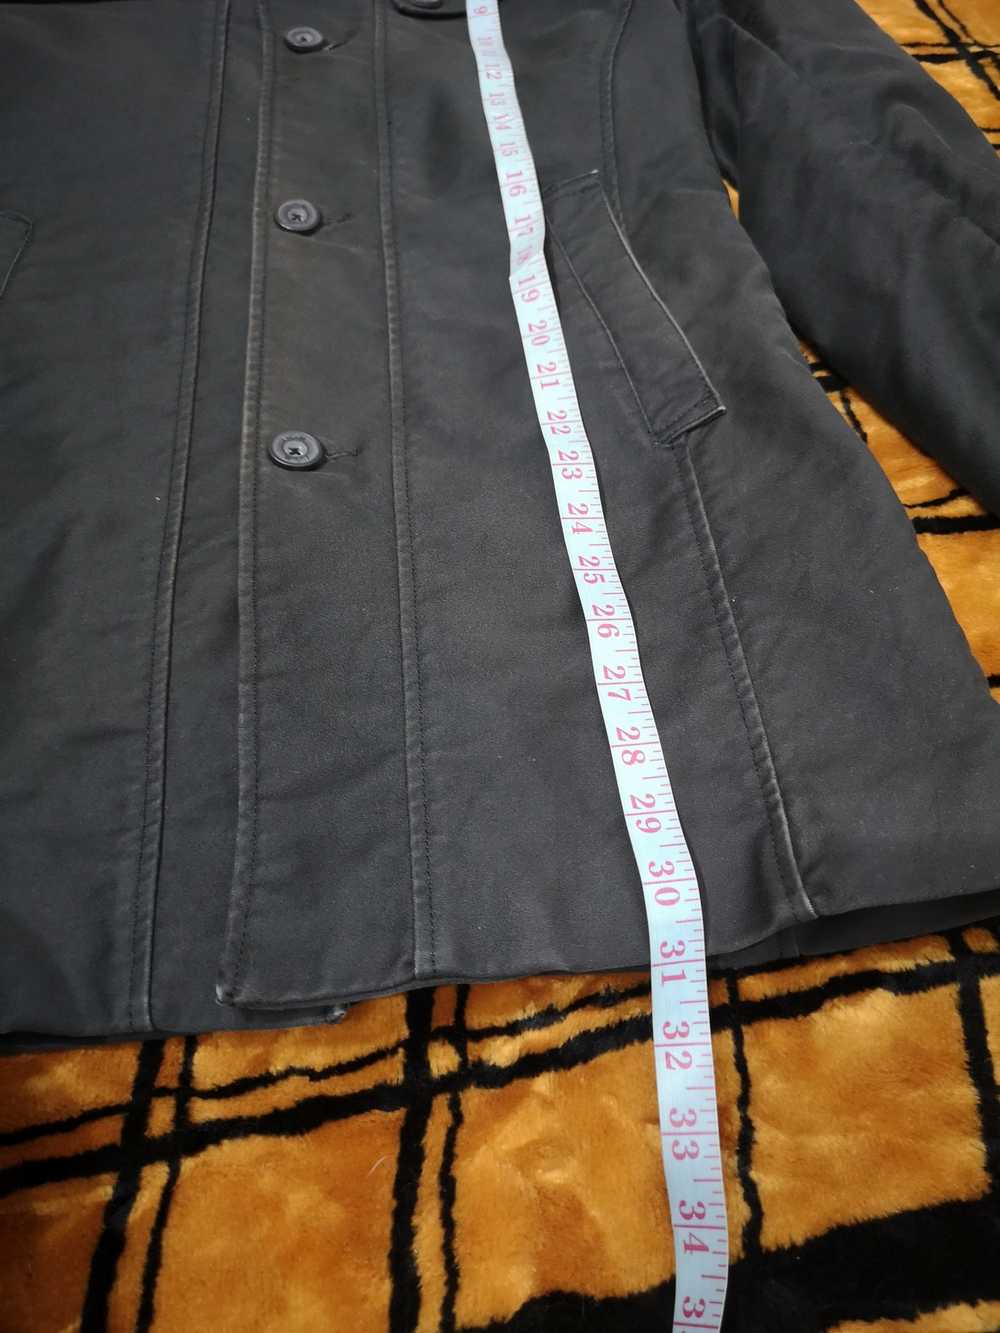 Japanese Brand A.S.M jacket ✖️Japanese Brand - Gem